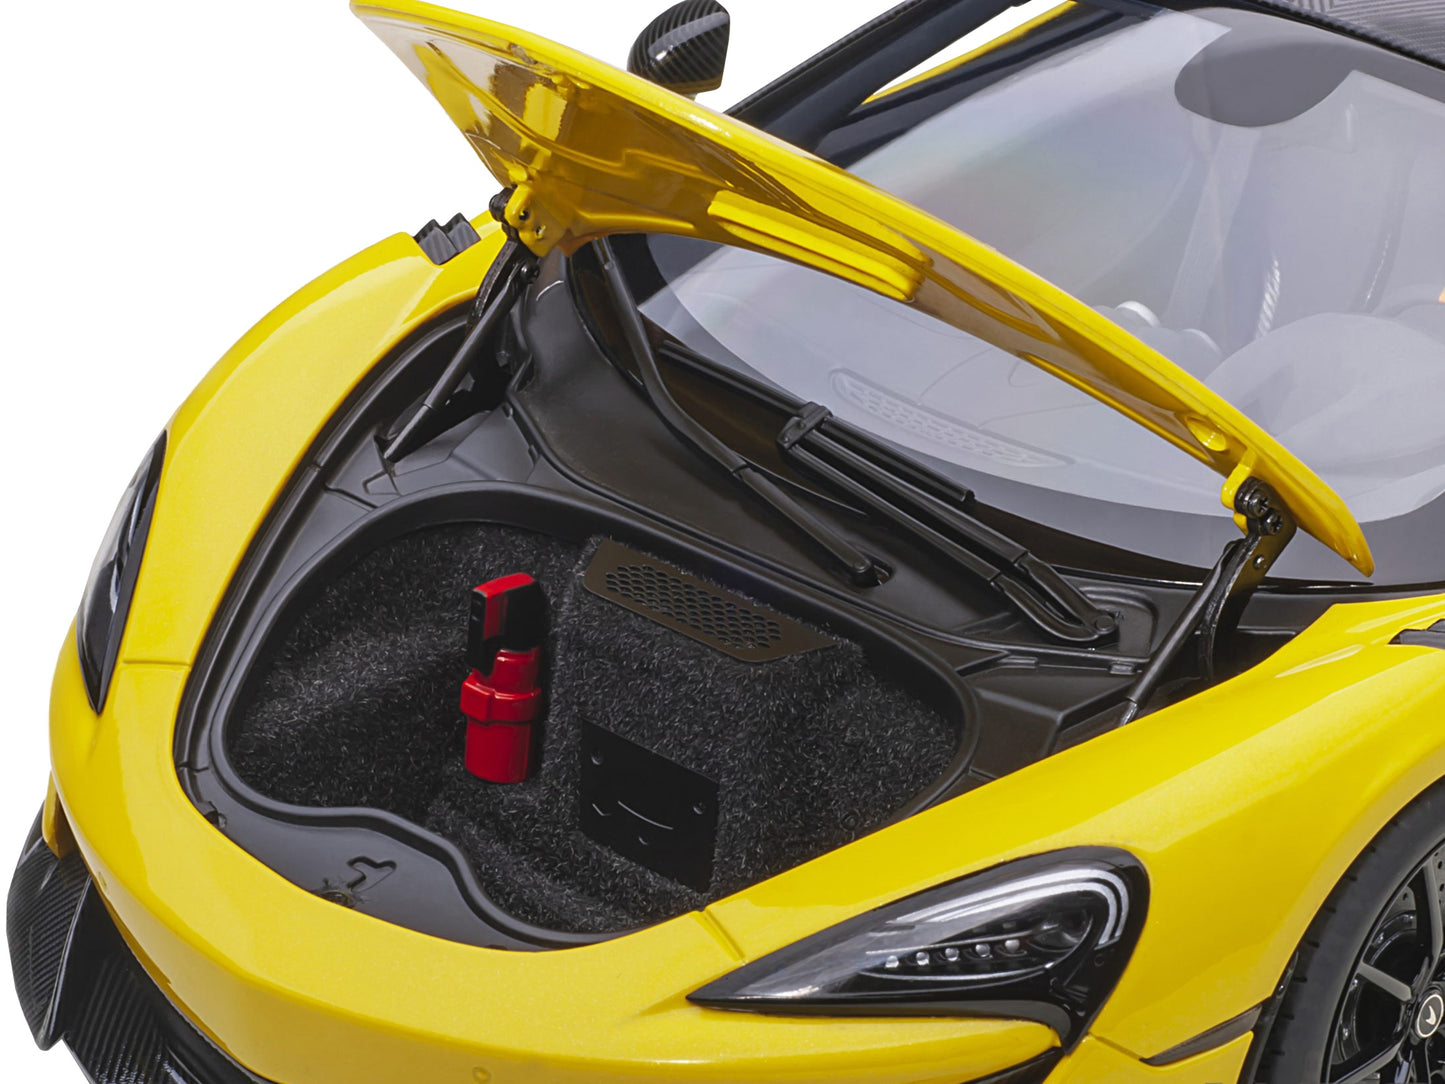 Mclaren 600LT Sicilian Yellow and Carbon 1/18 Model Car by Autoart